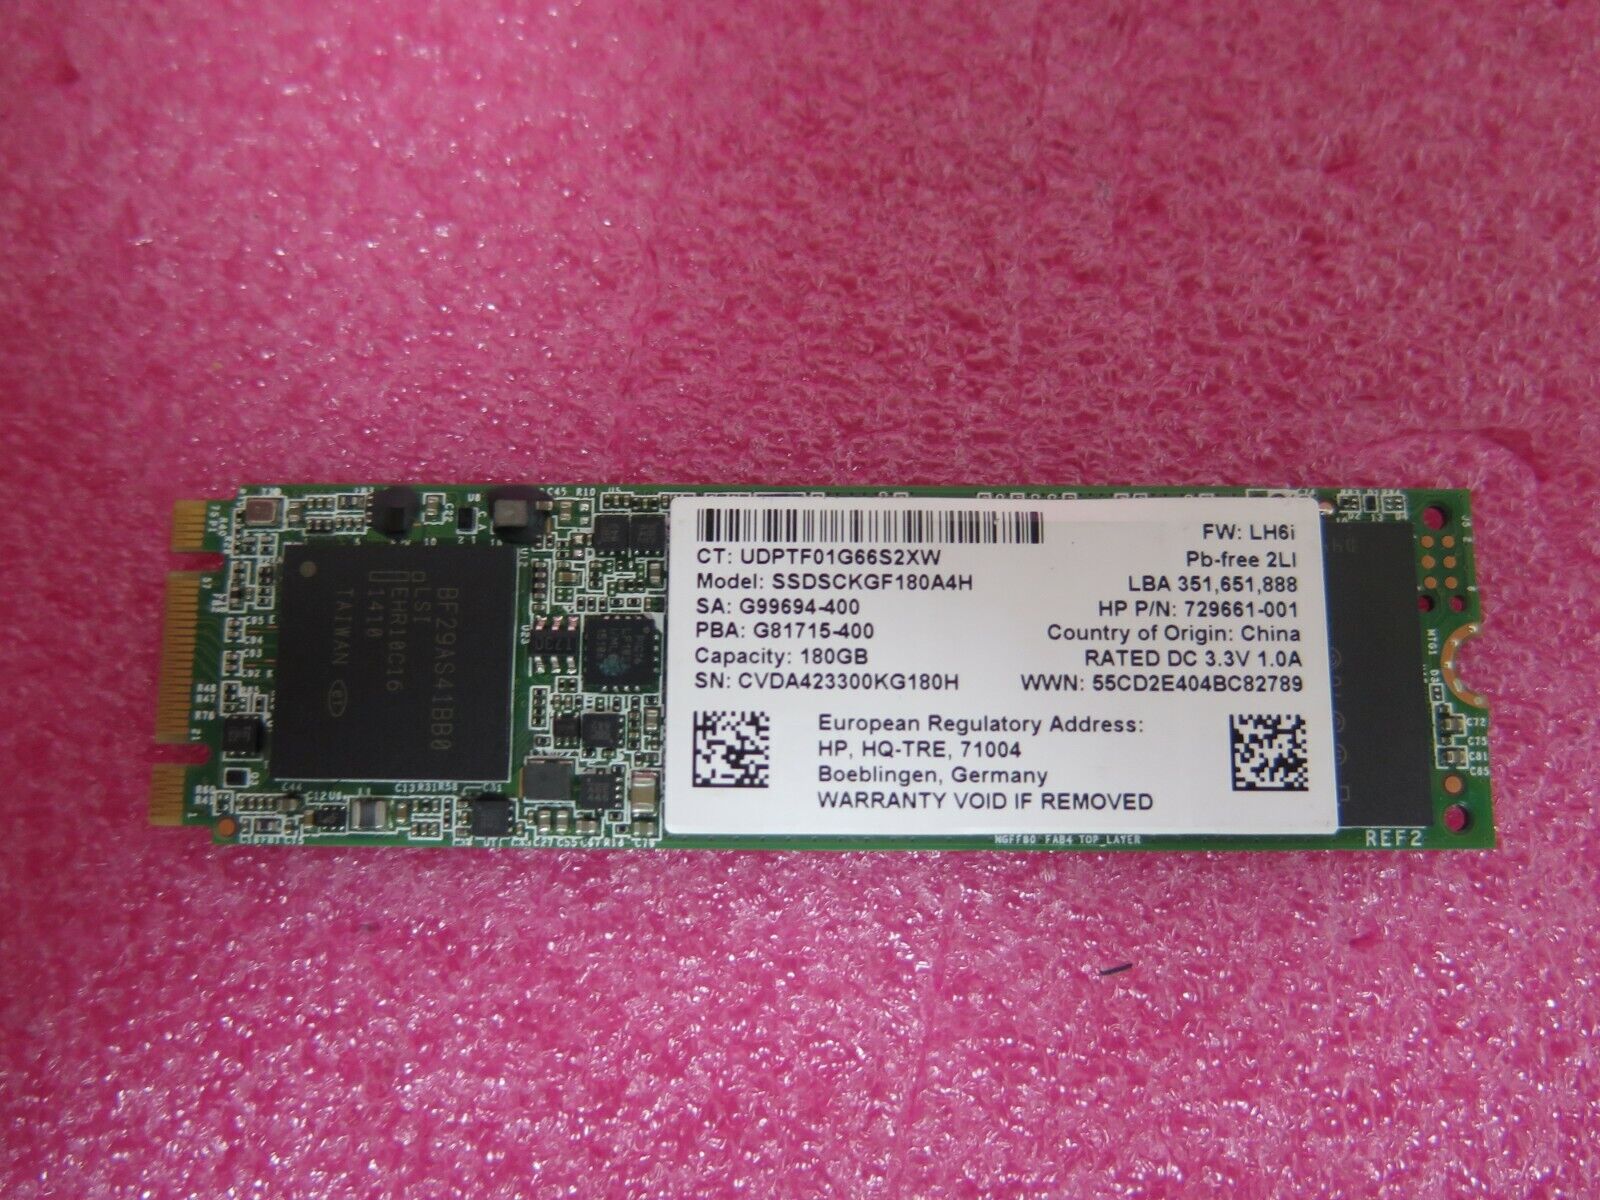 HP 180GB M.2 SSD SOLID STATE DRIVE SSDSCKGF180A4H 729661-001